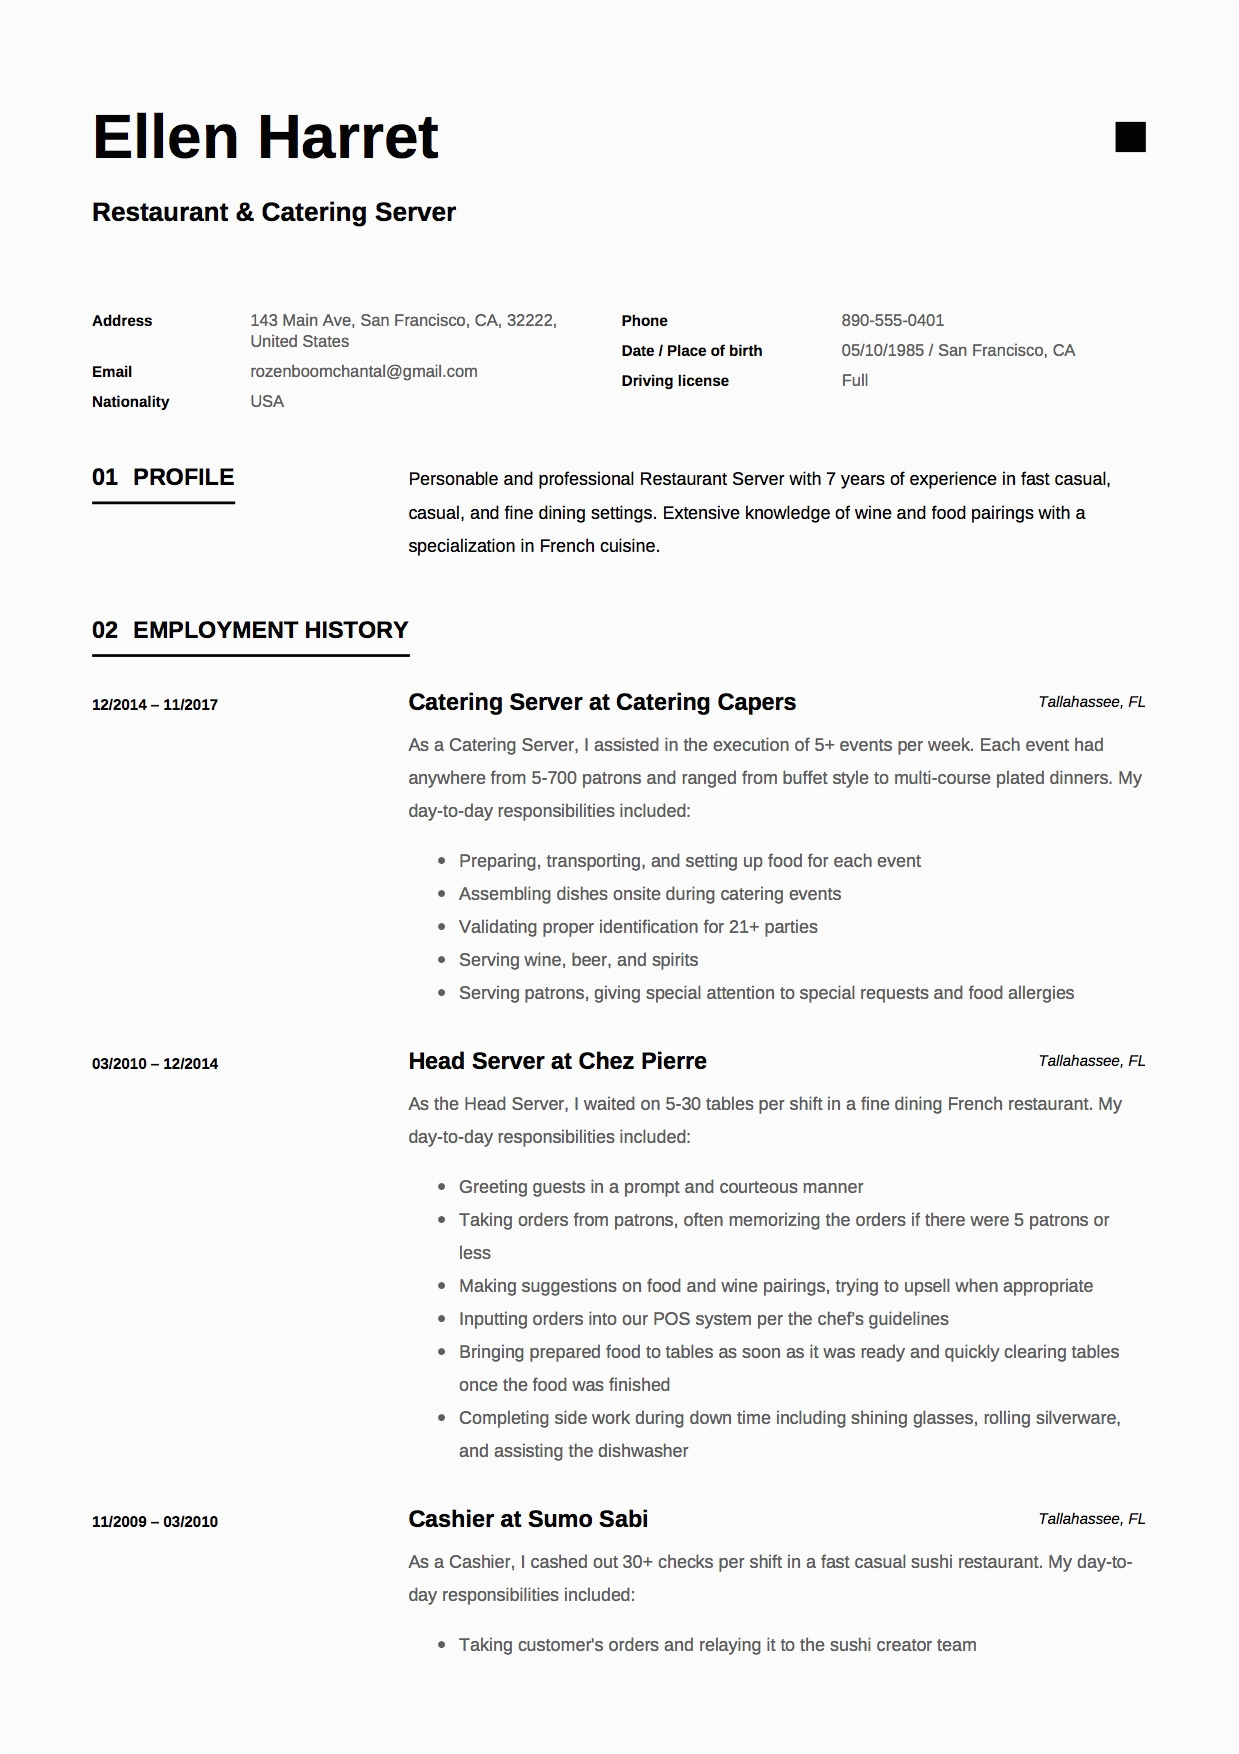 Restaurant Server Job Description Resume Sample Full Guide Restaurant Server Resume 12 Pdf Examples